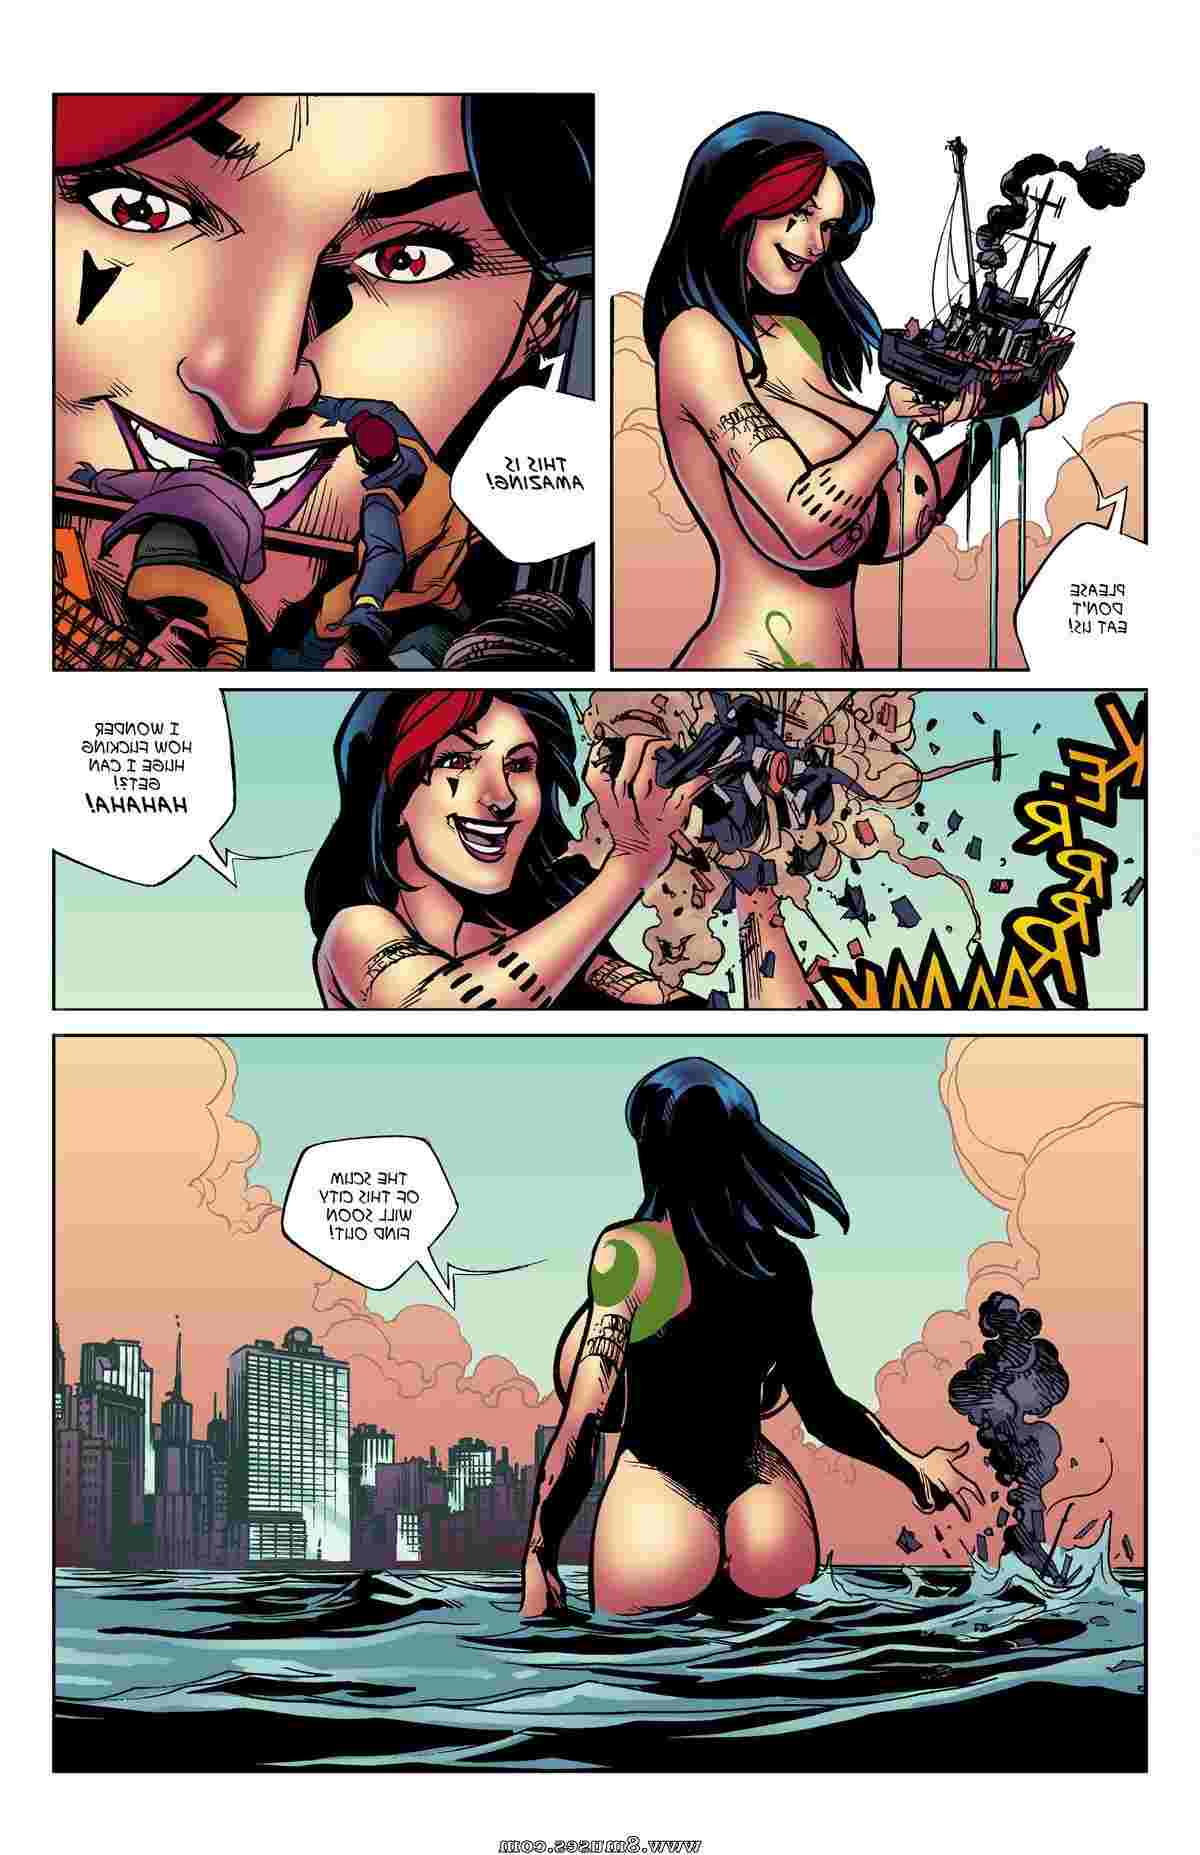 Giantess-Club-Comics/Beyond-the-Law Beyond_the_Law__8muses_-_Sex_and_Porn_Comics_24.jpg